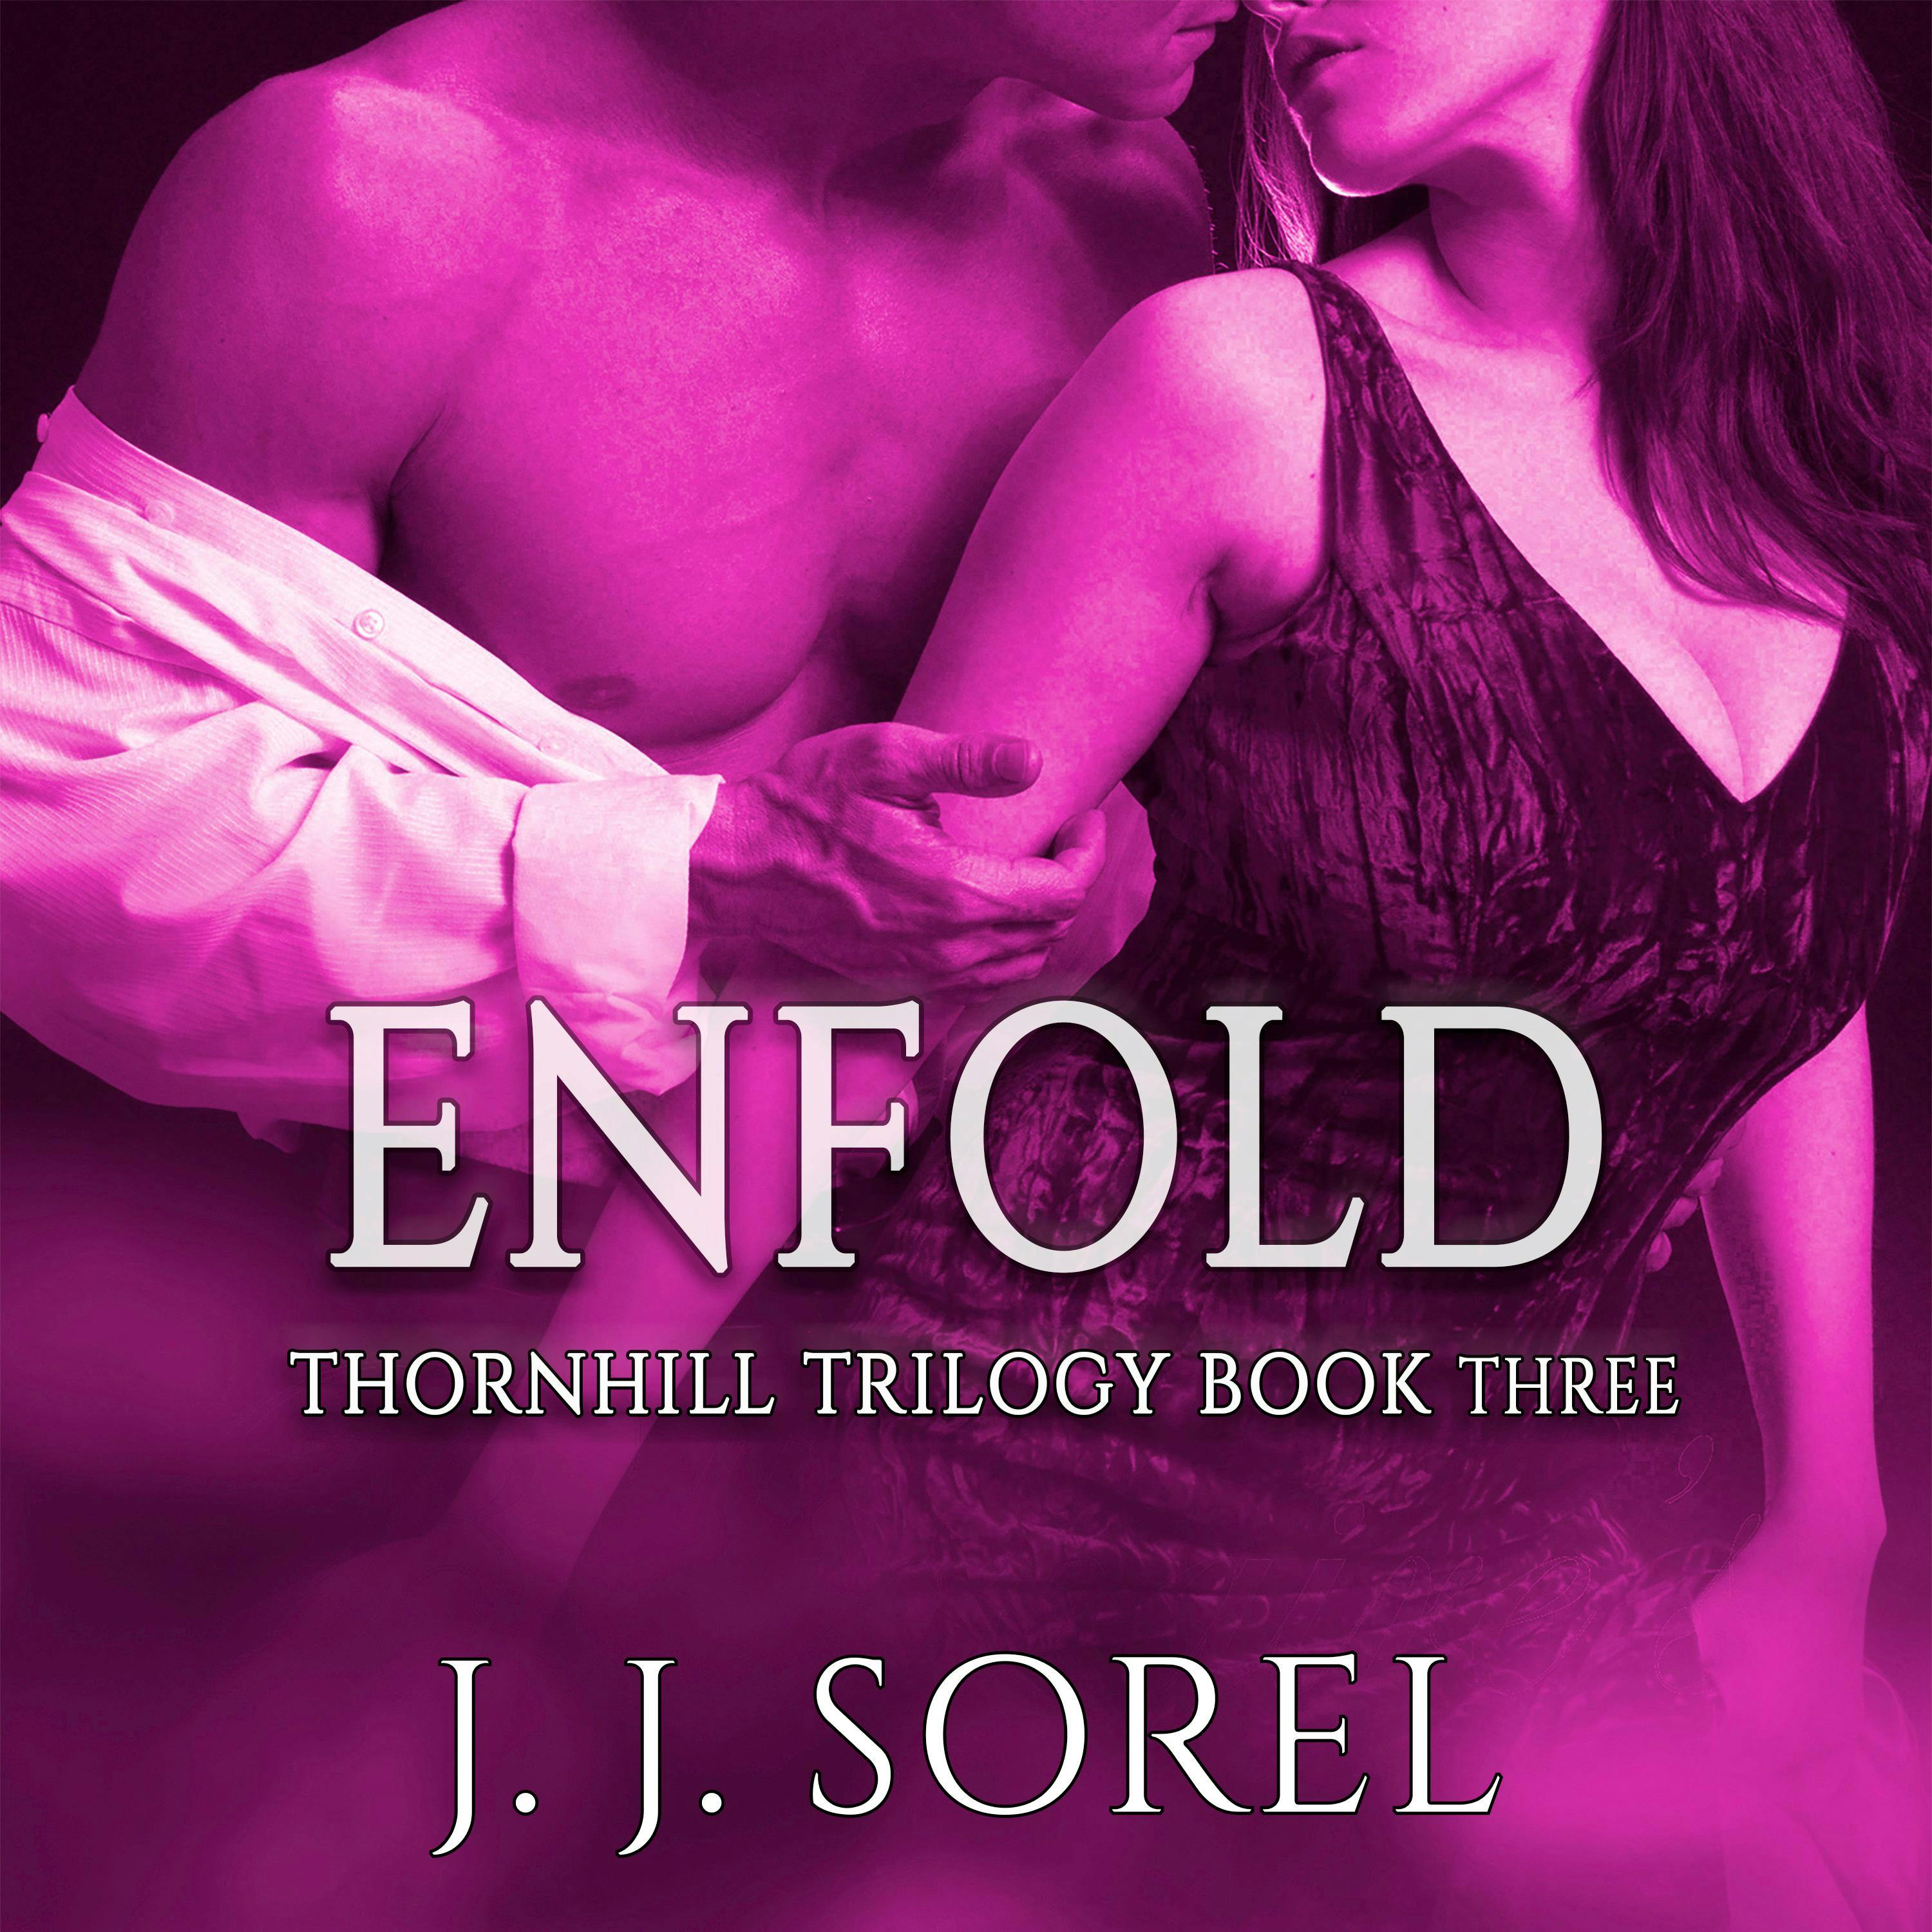 Enfold - J. J. Sorel